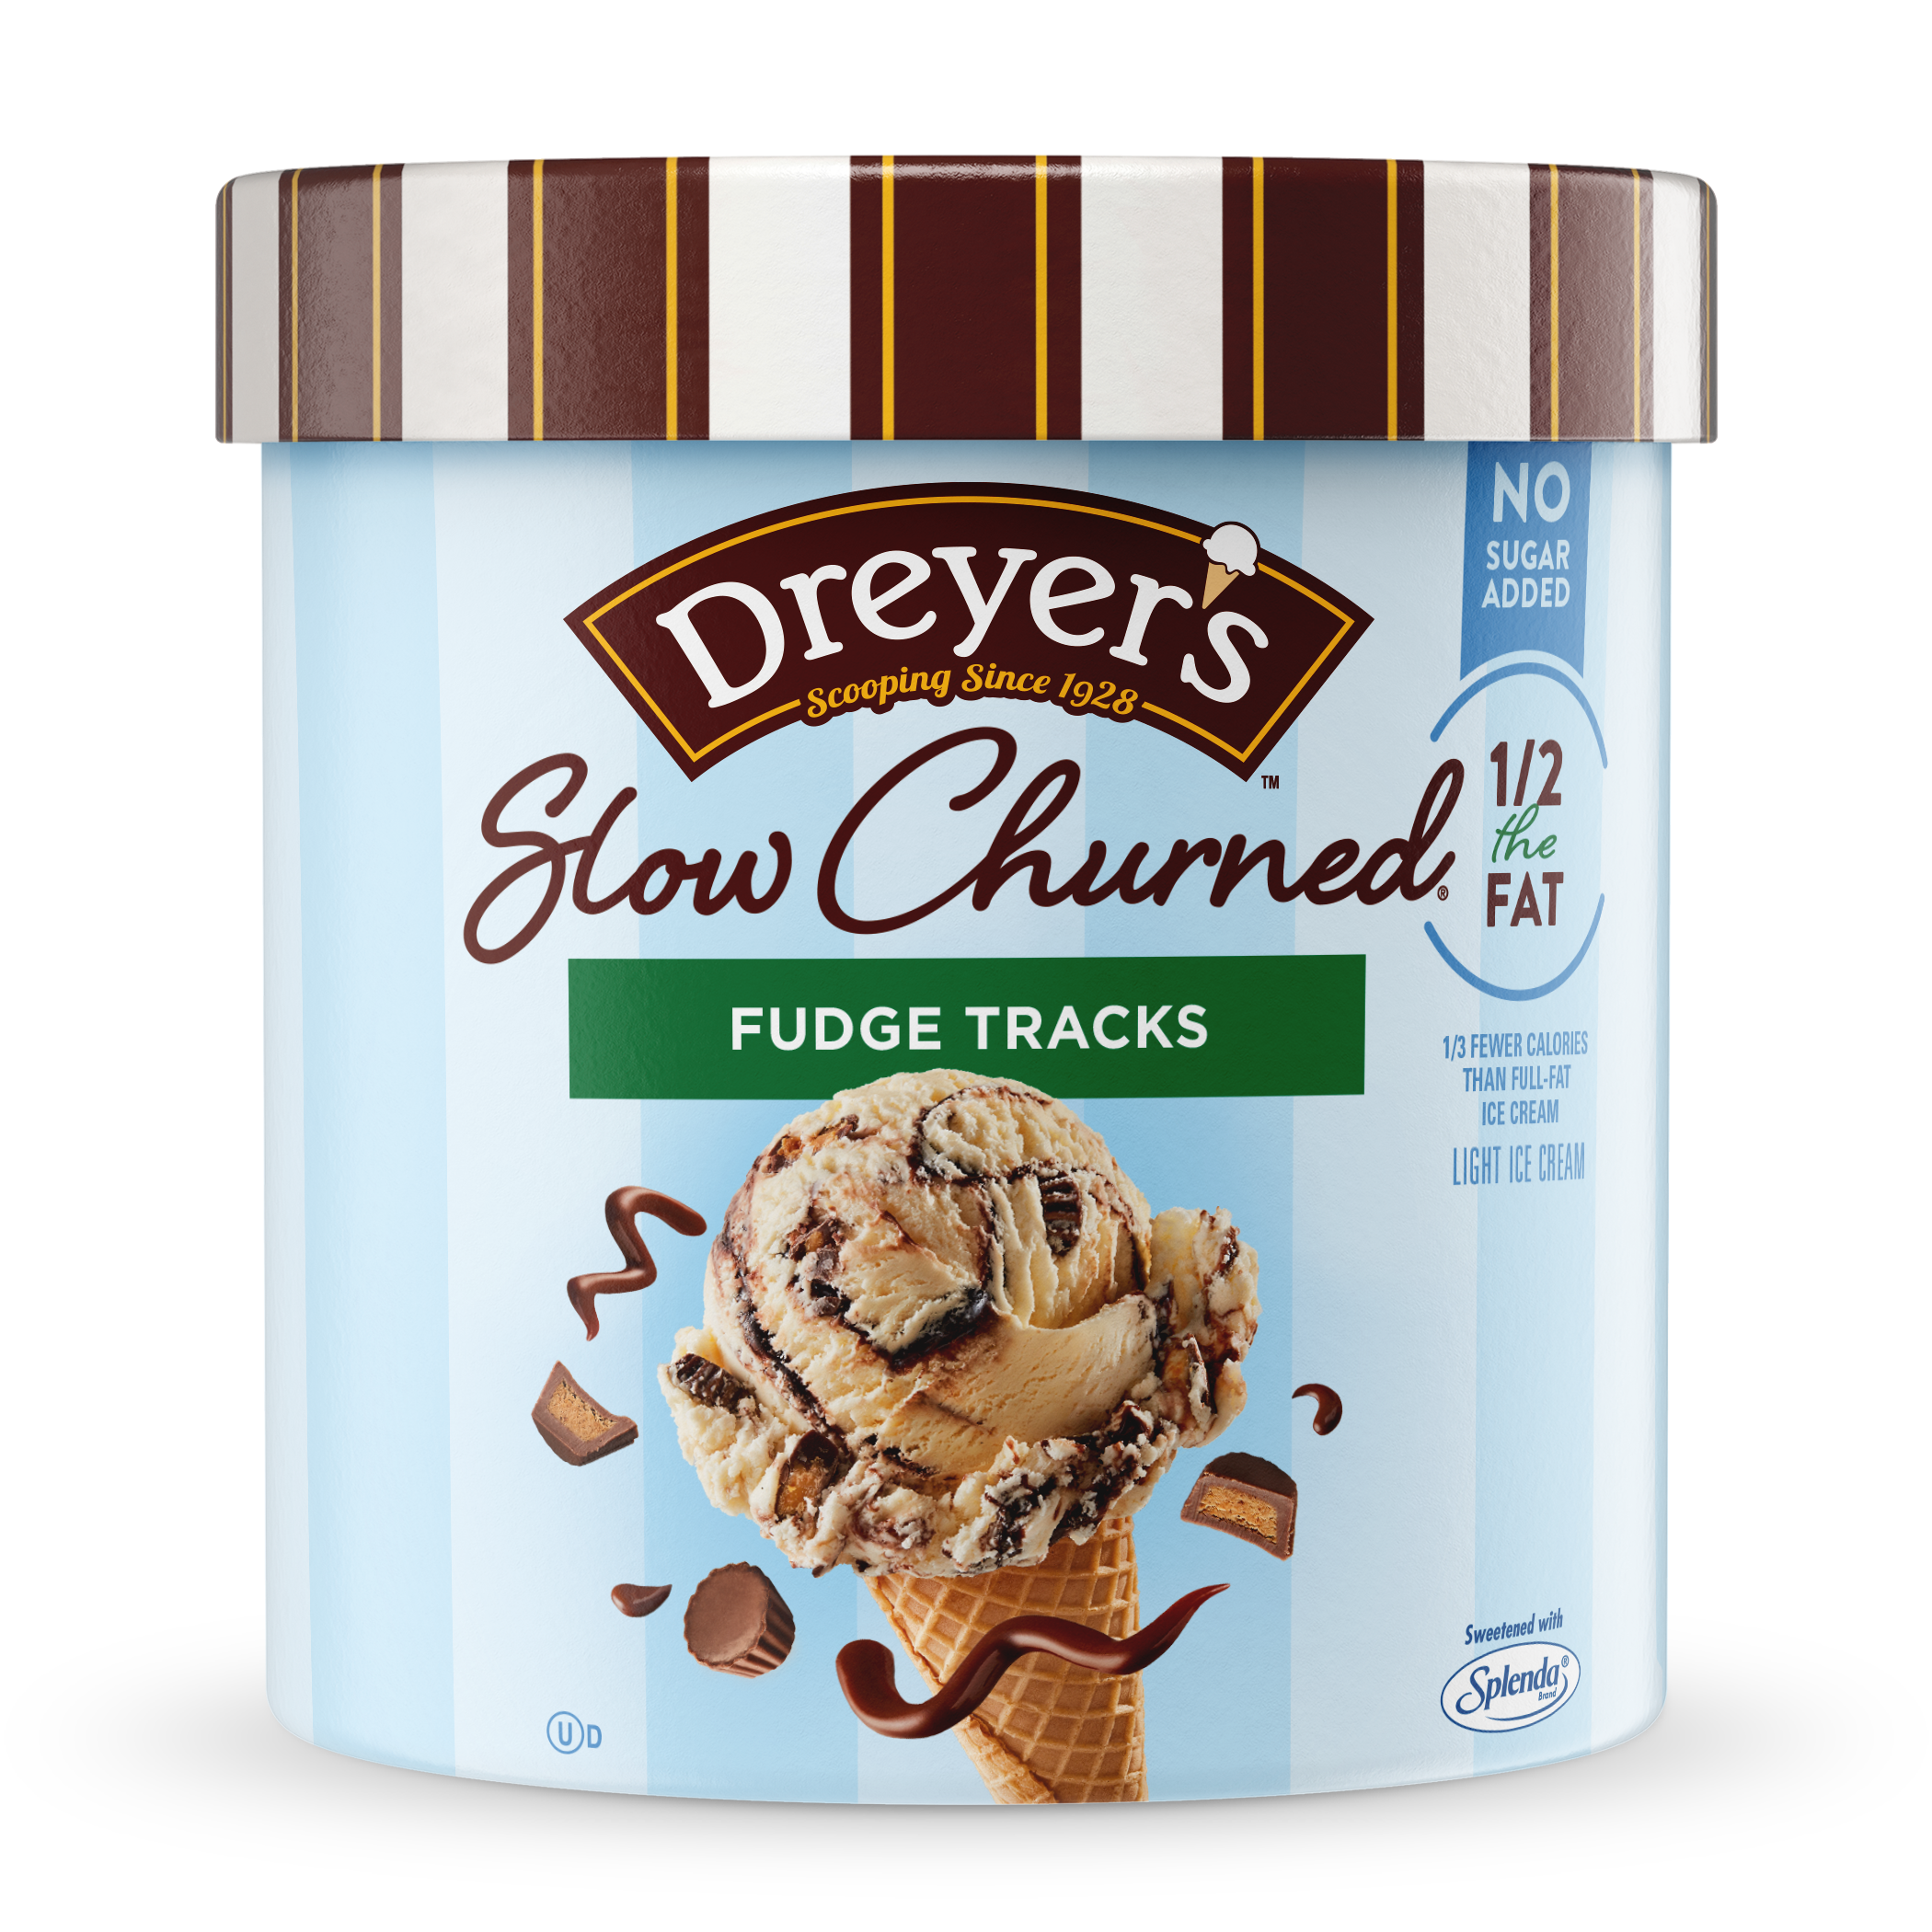 Carton of Dreyer's slow-churned fudge tracks ice cream